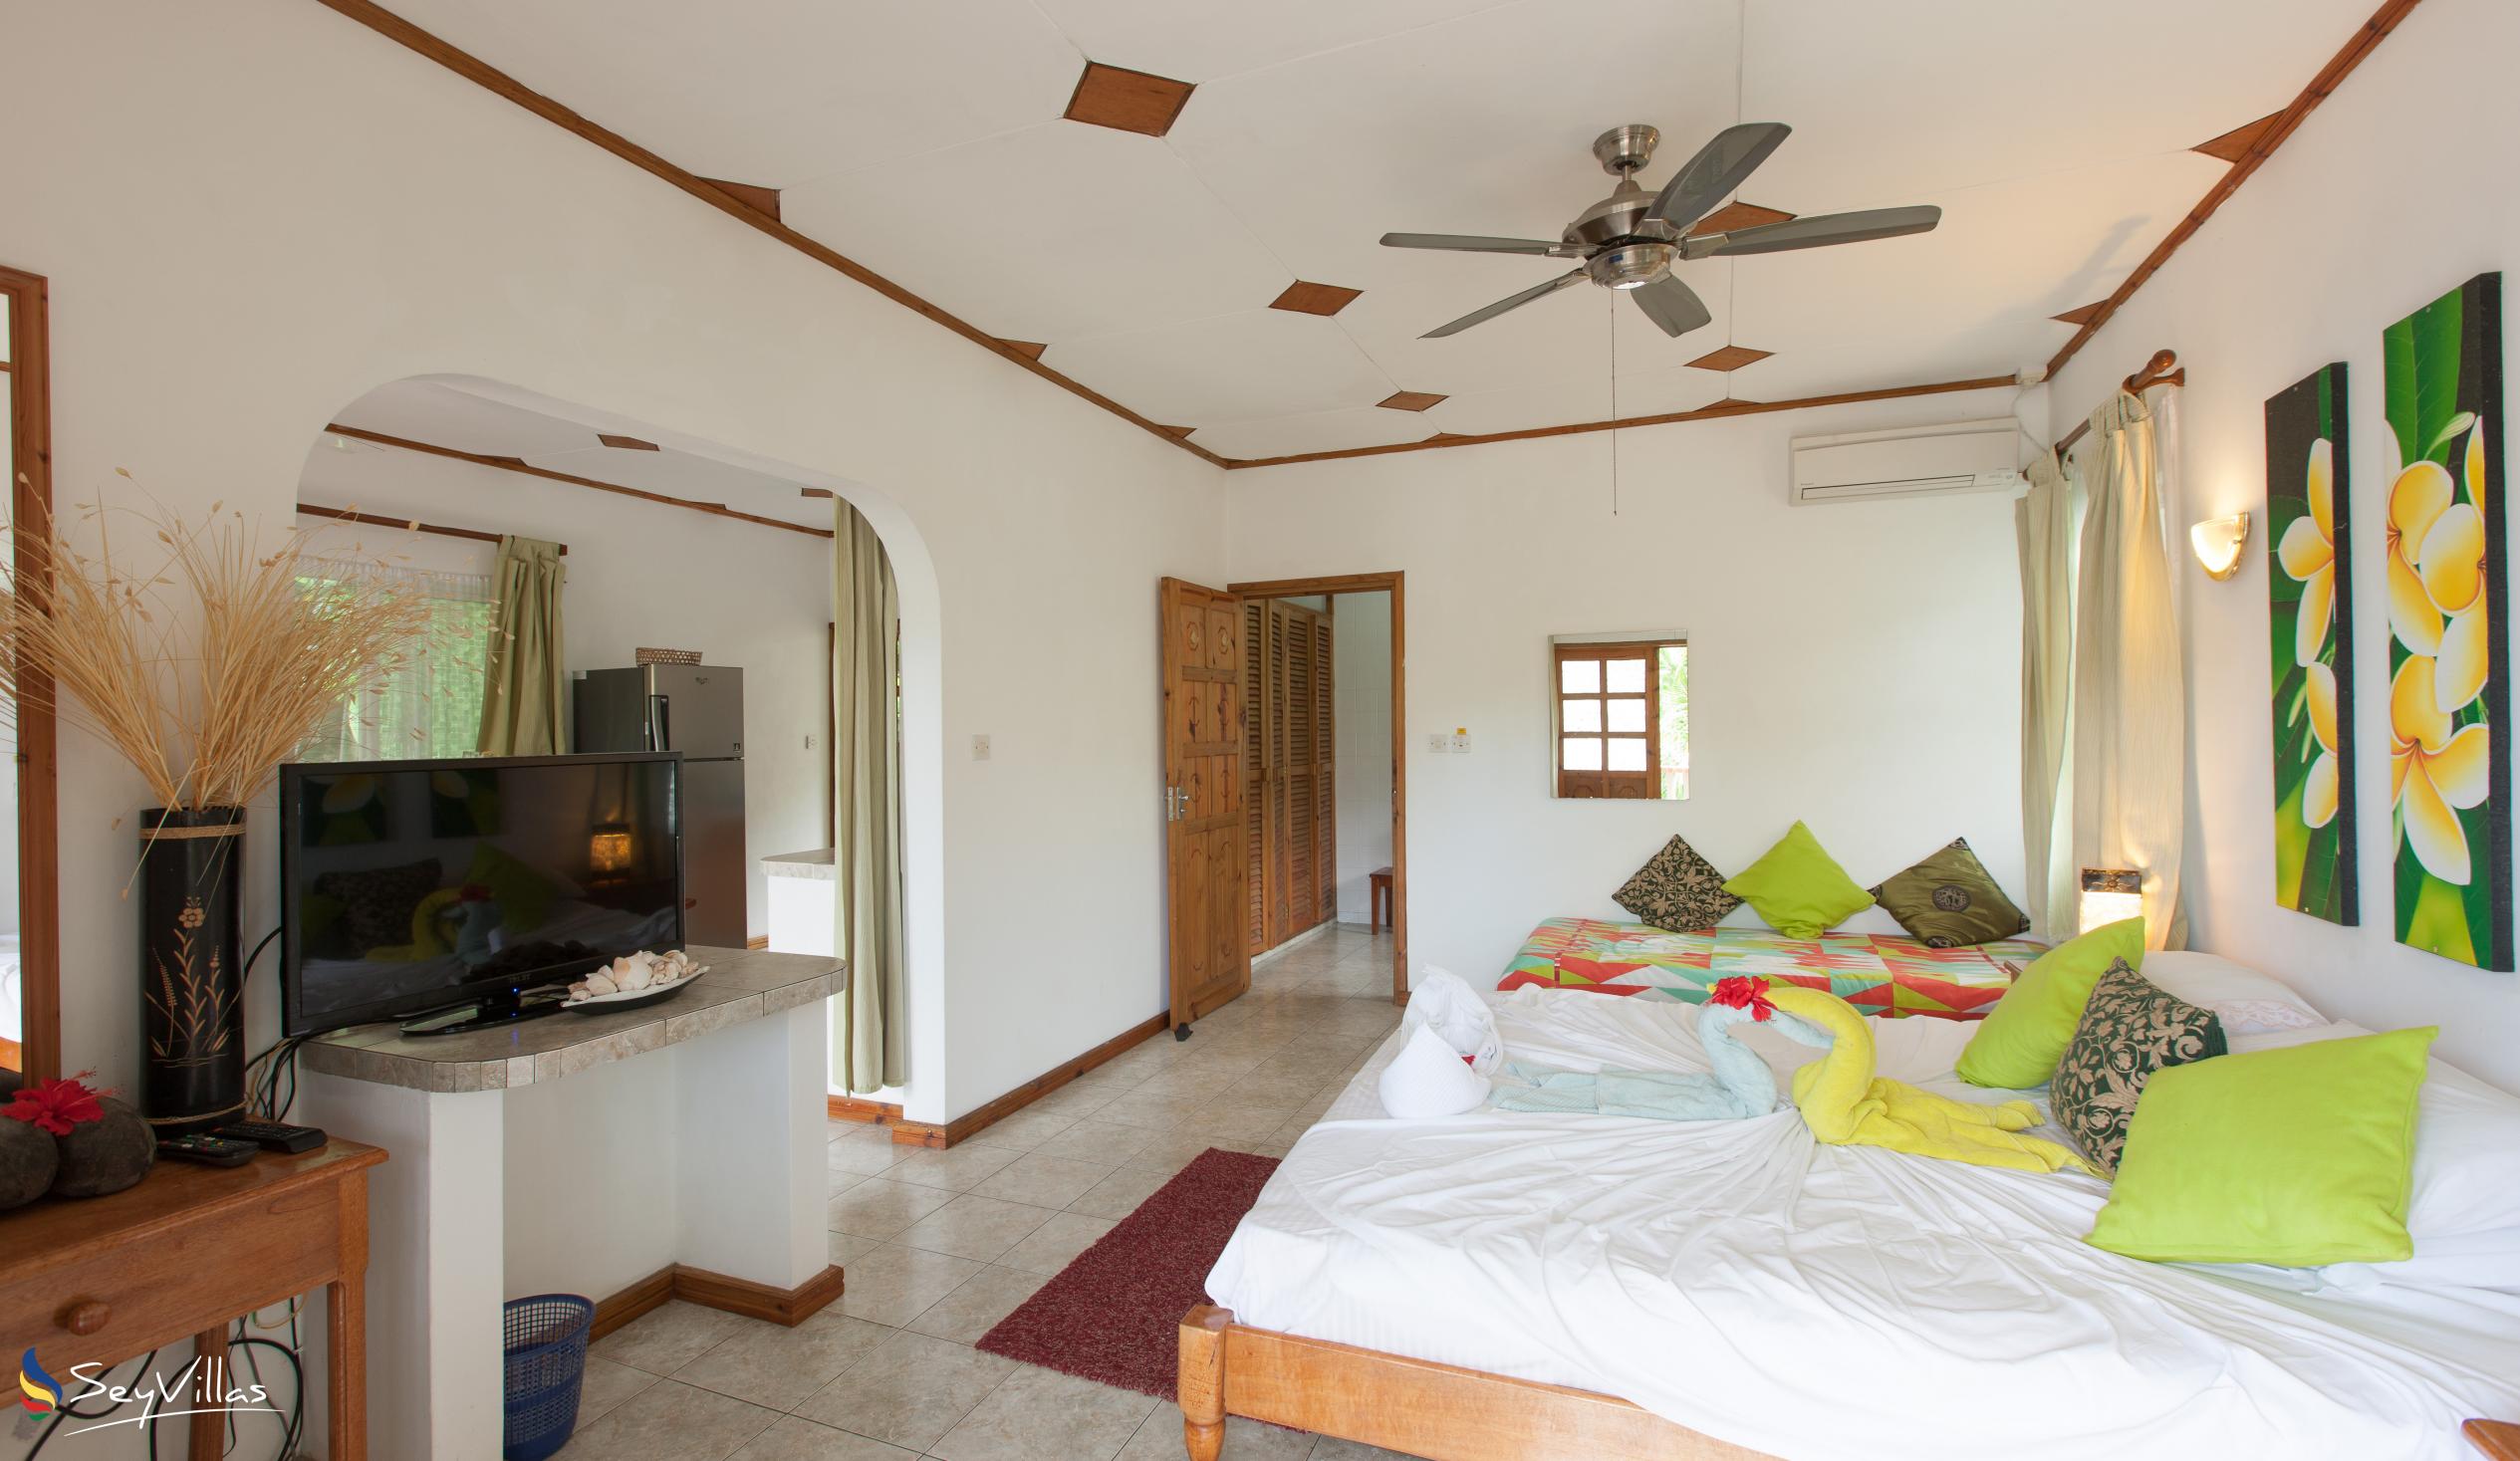 Foto 113: Sea View Lodge - Petite Villa sur pilotis - Praslin (Seychelles)